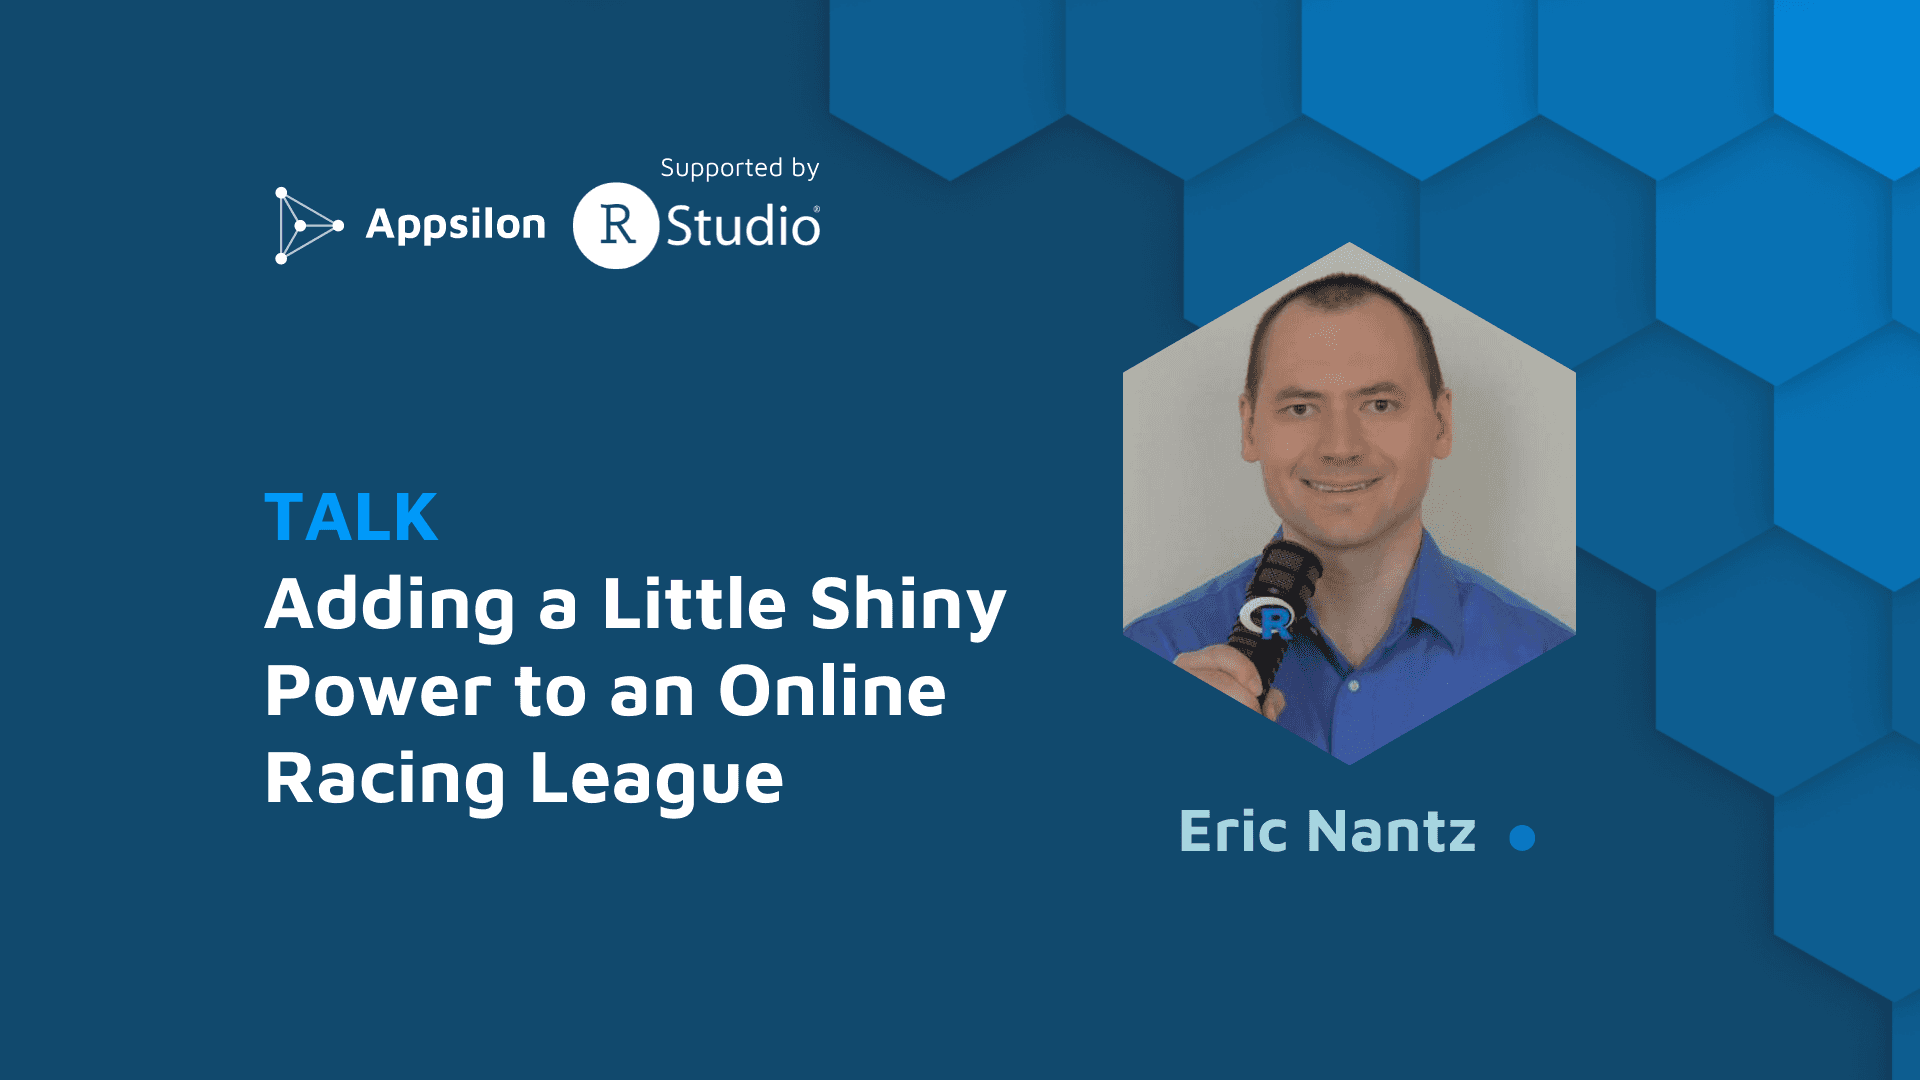 eric nantz - adding a little shiny power to an online racing league thumbnail